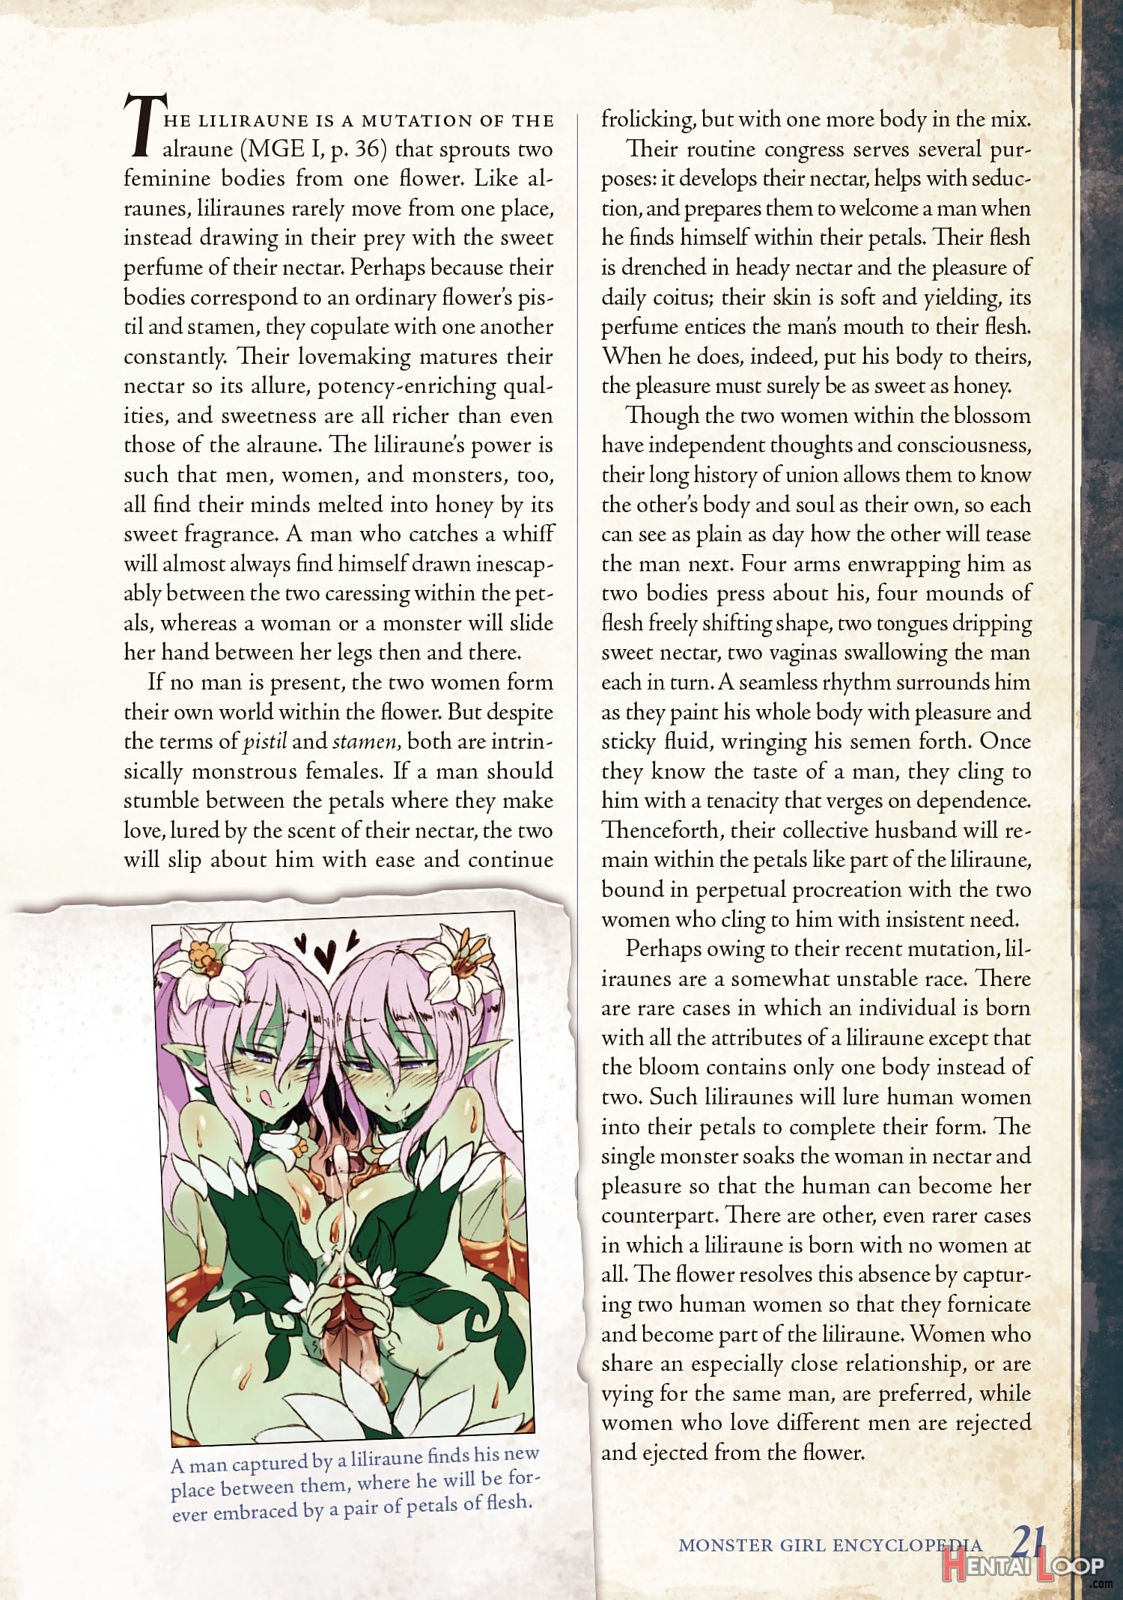 Monster Girl Encyclopedia Vol. 2 page 22